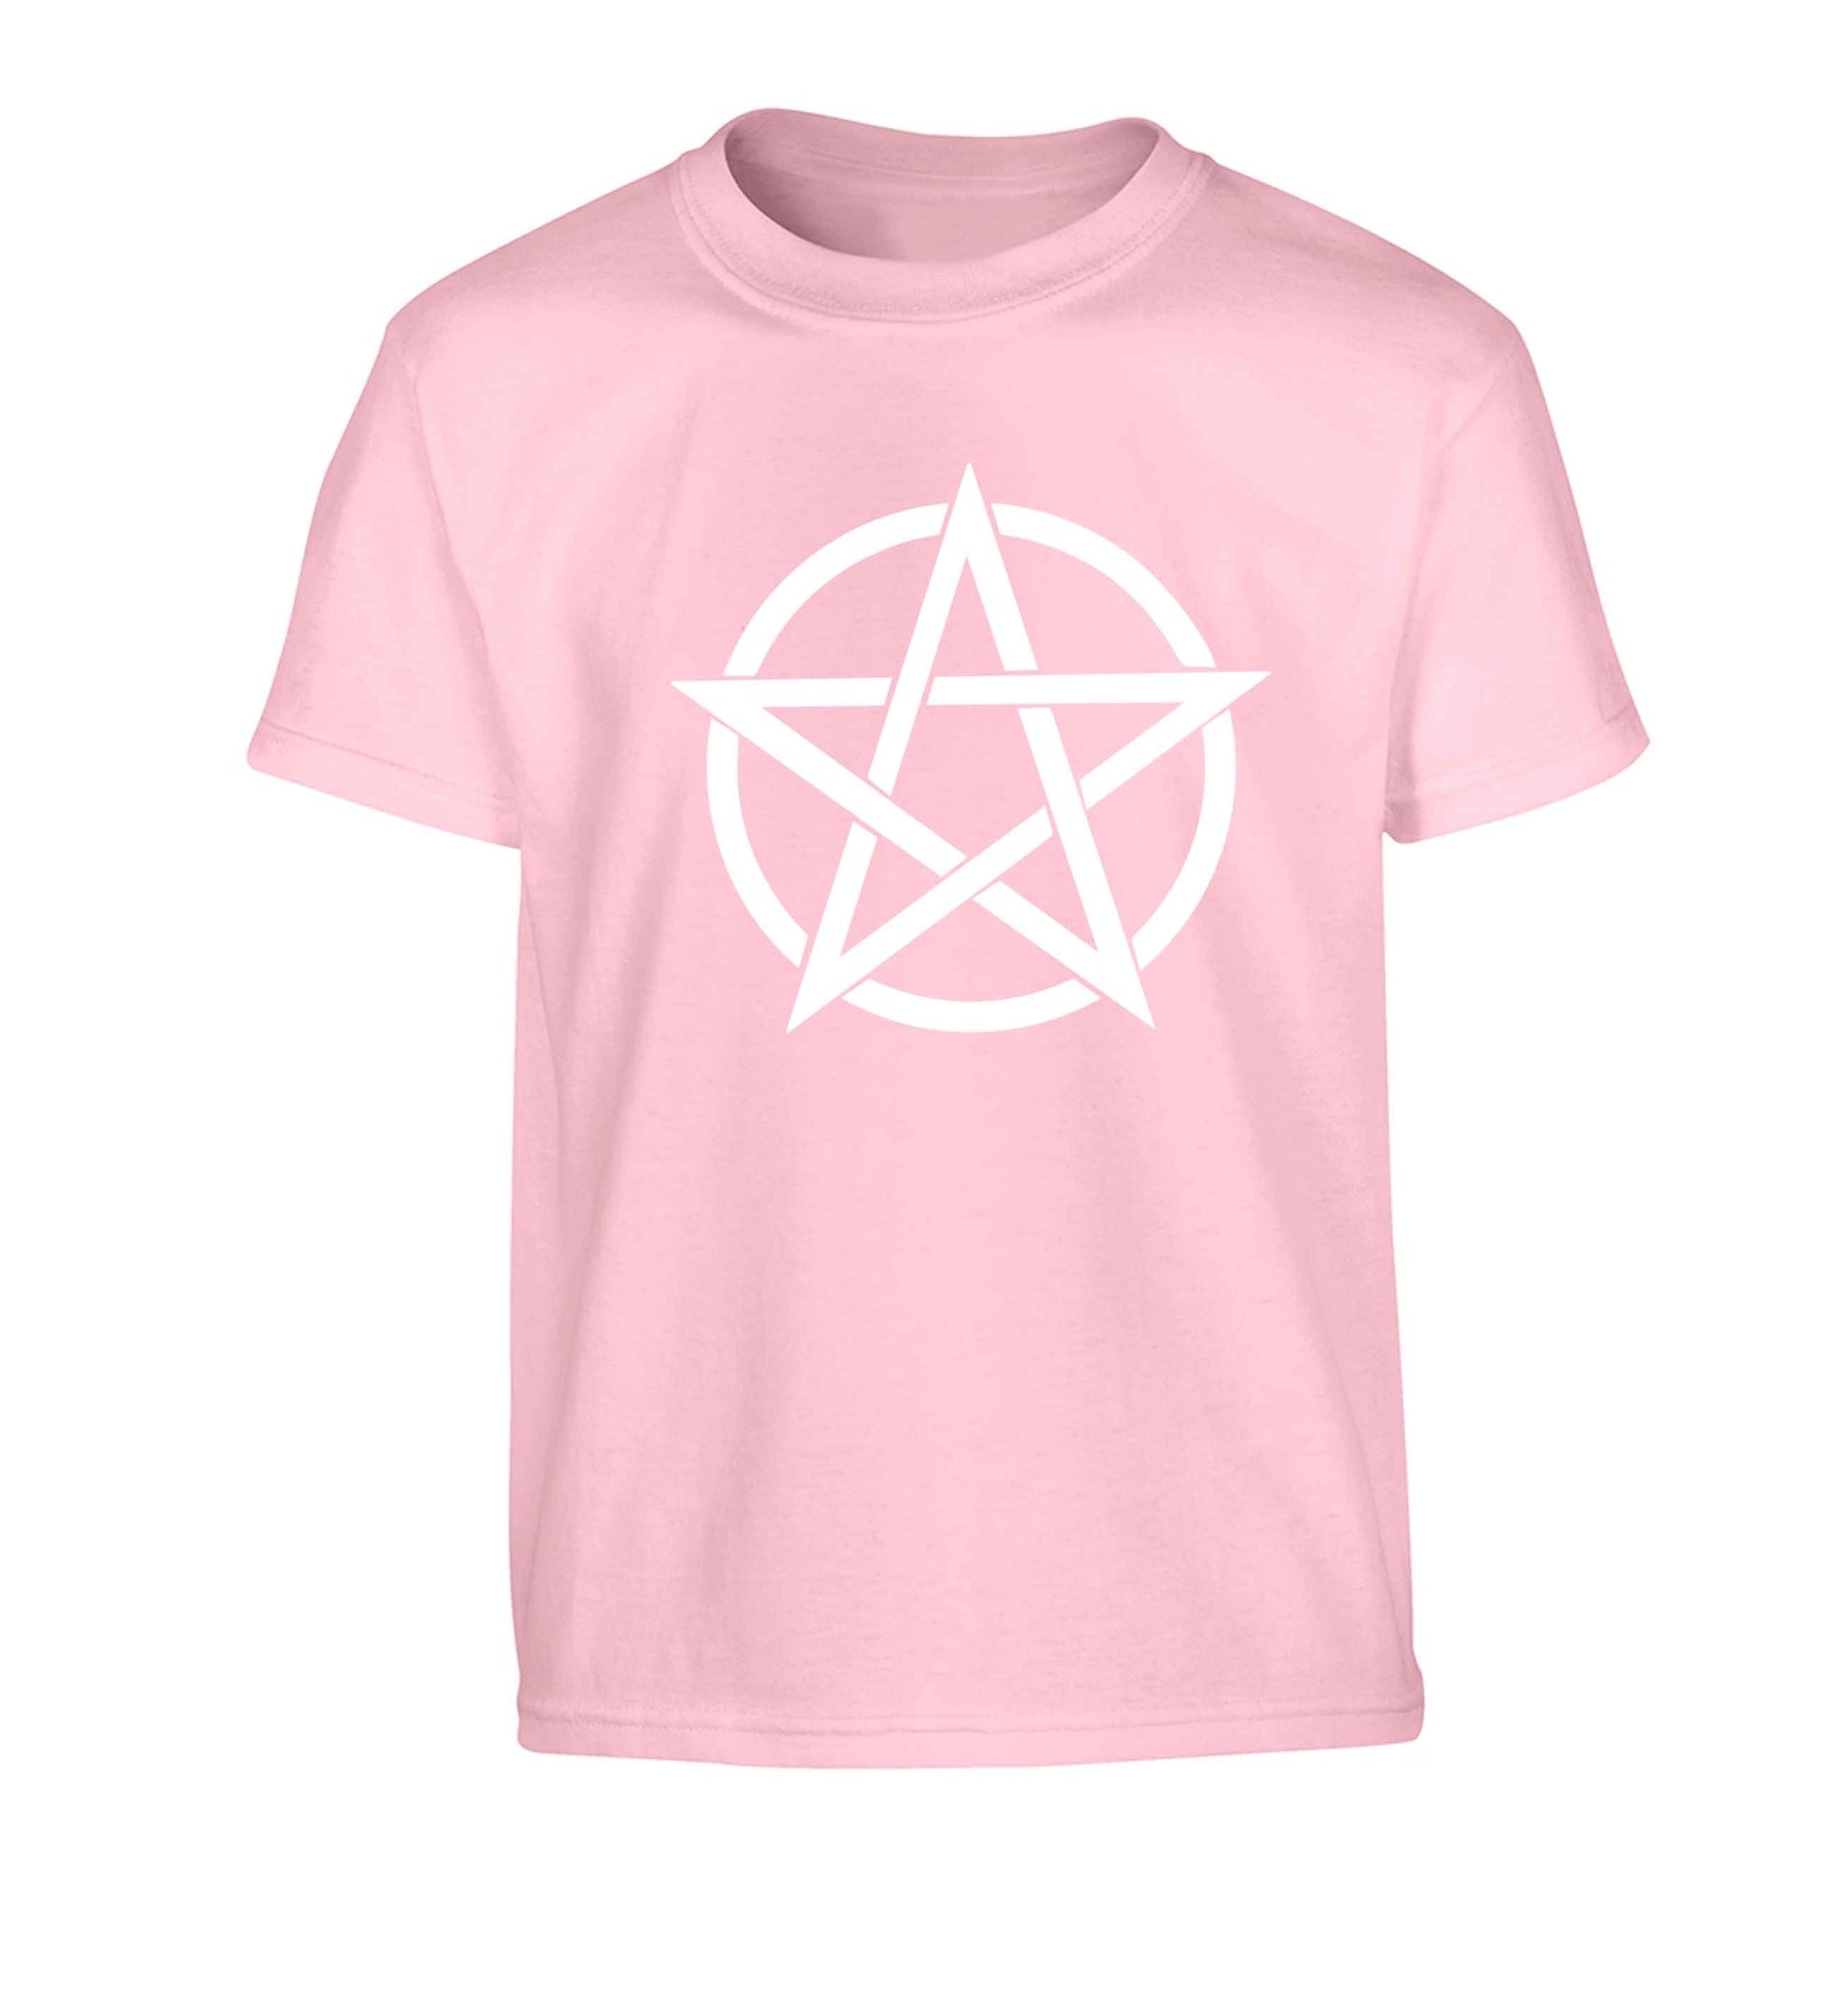 Pentagram symbol Children's light pink Tshirt 12-13 Years